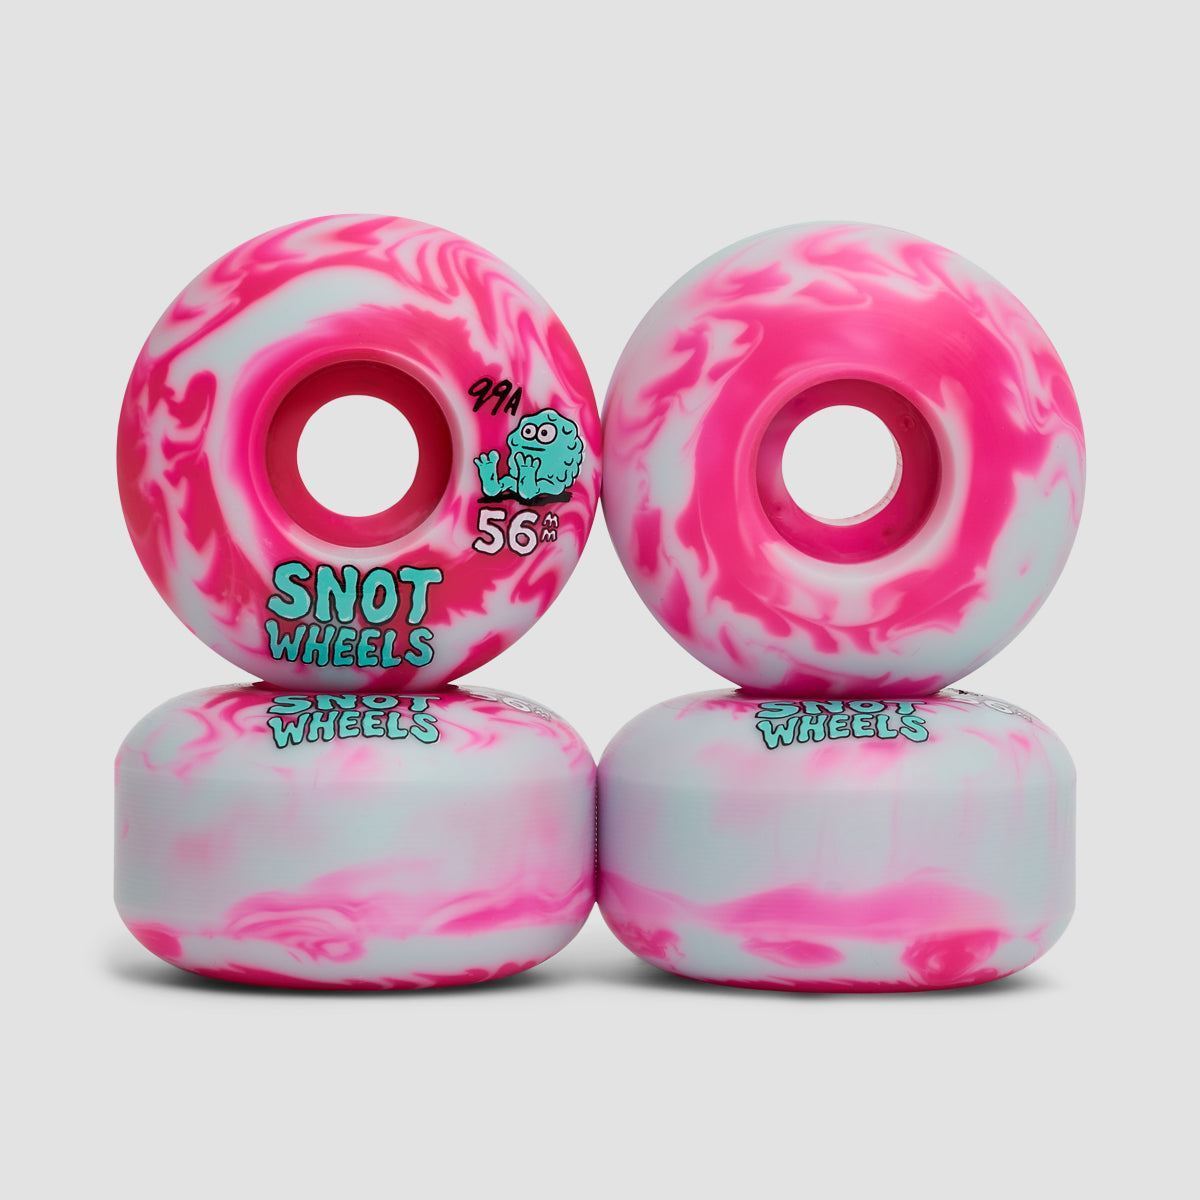 Snot Swirls 99A Skateboard Wheels Pink/Teal 56mm